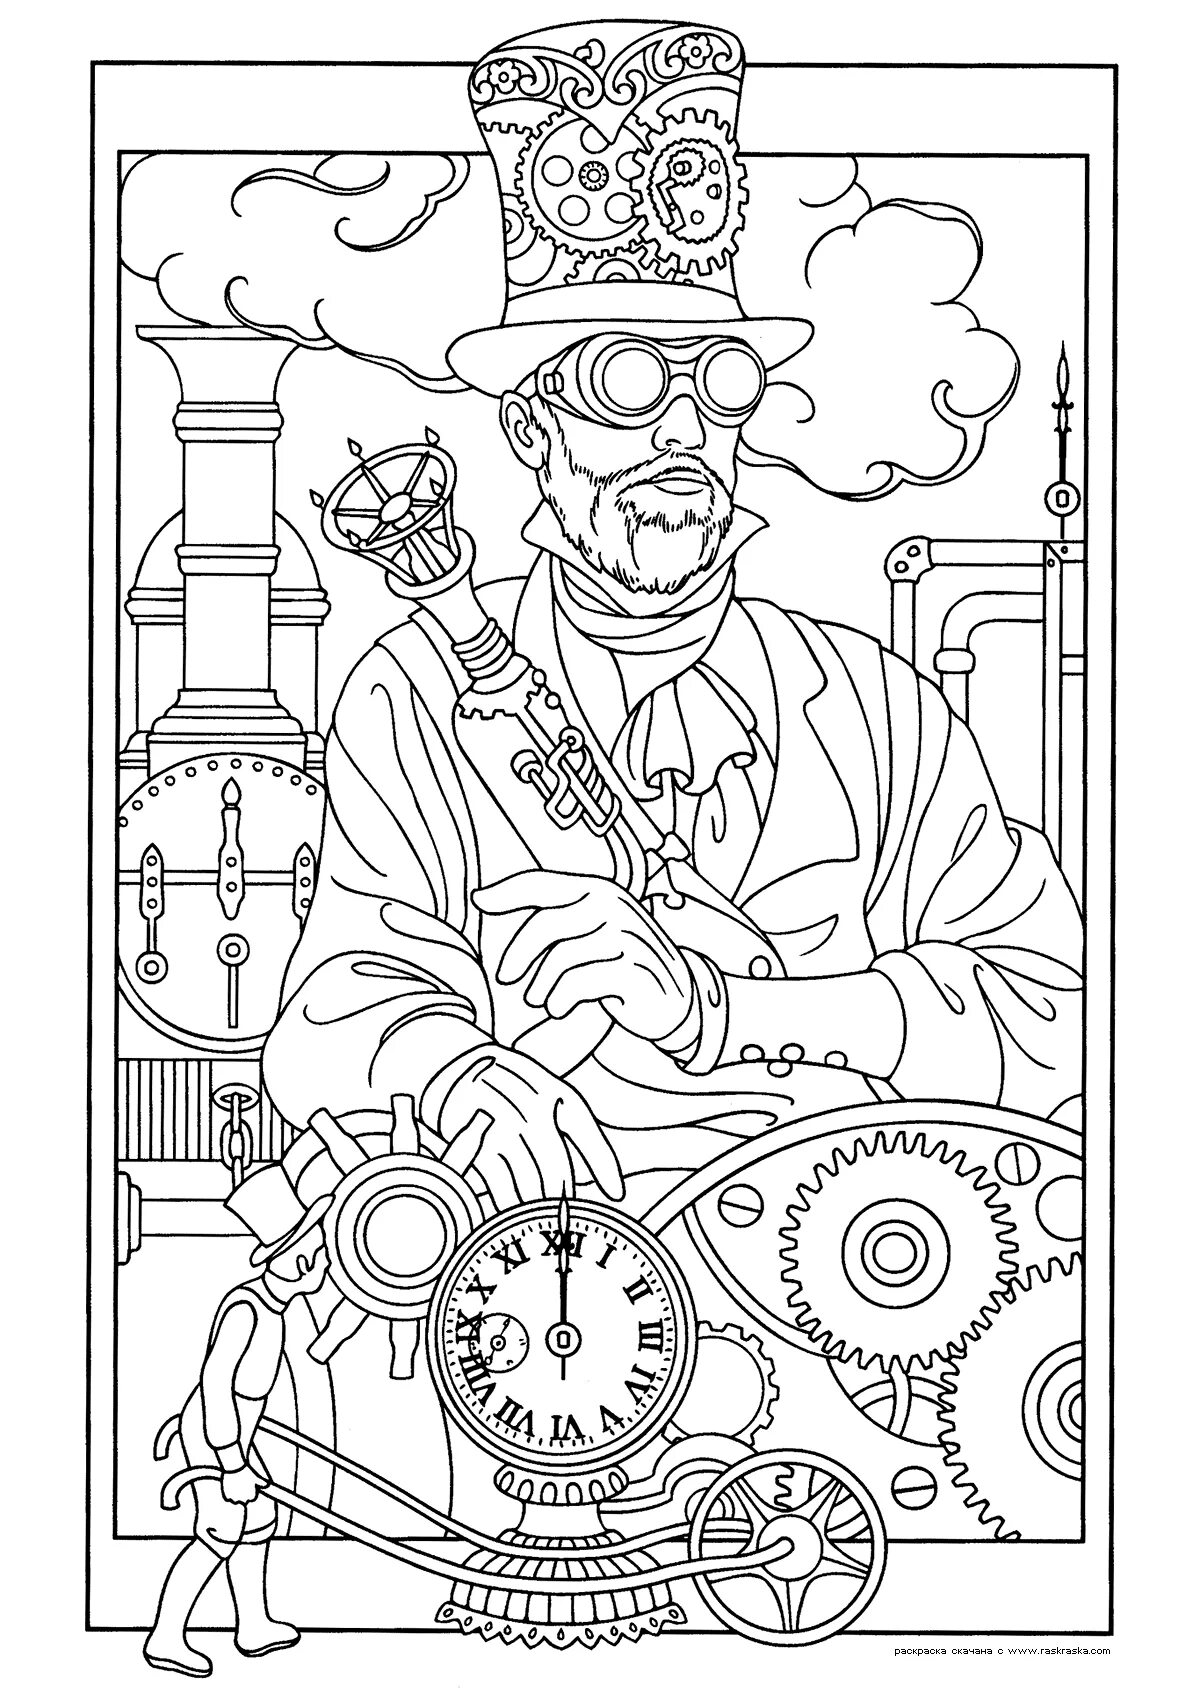 Irresistible steampunk coloring book